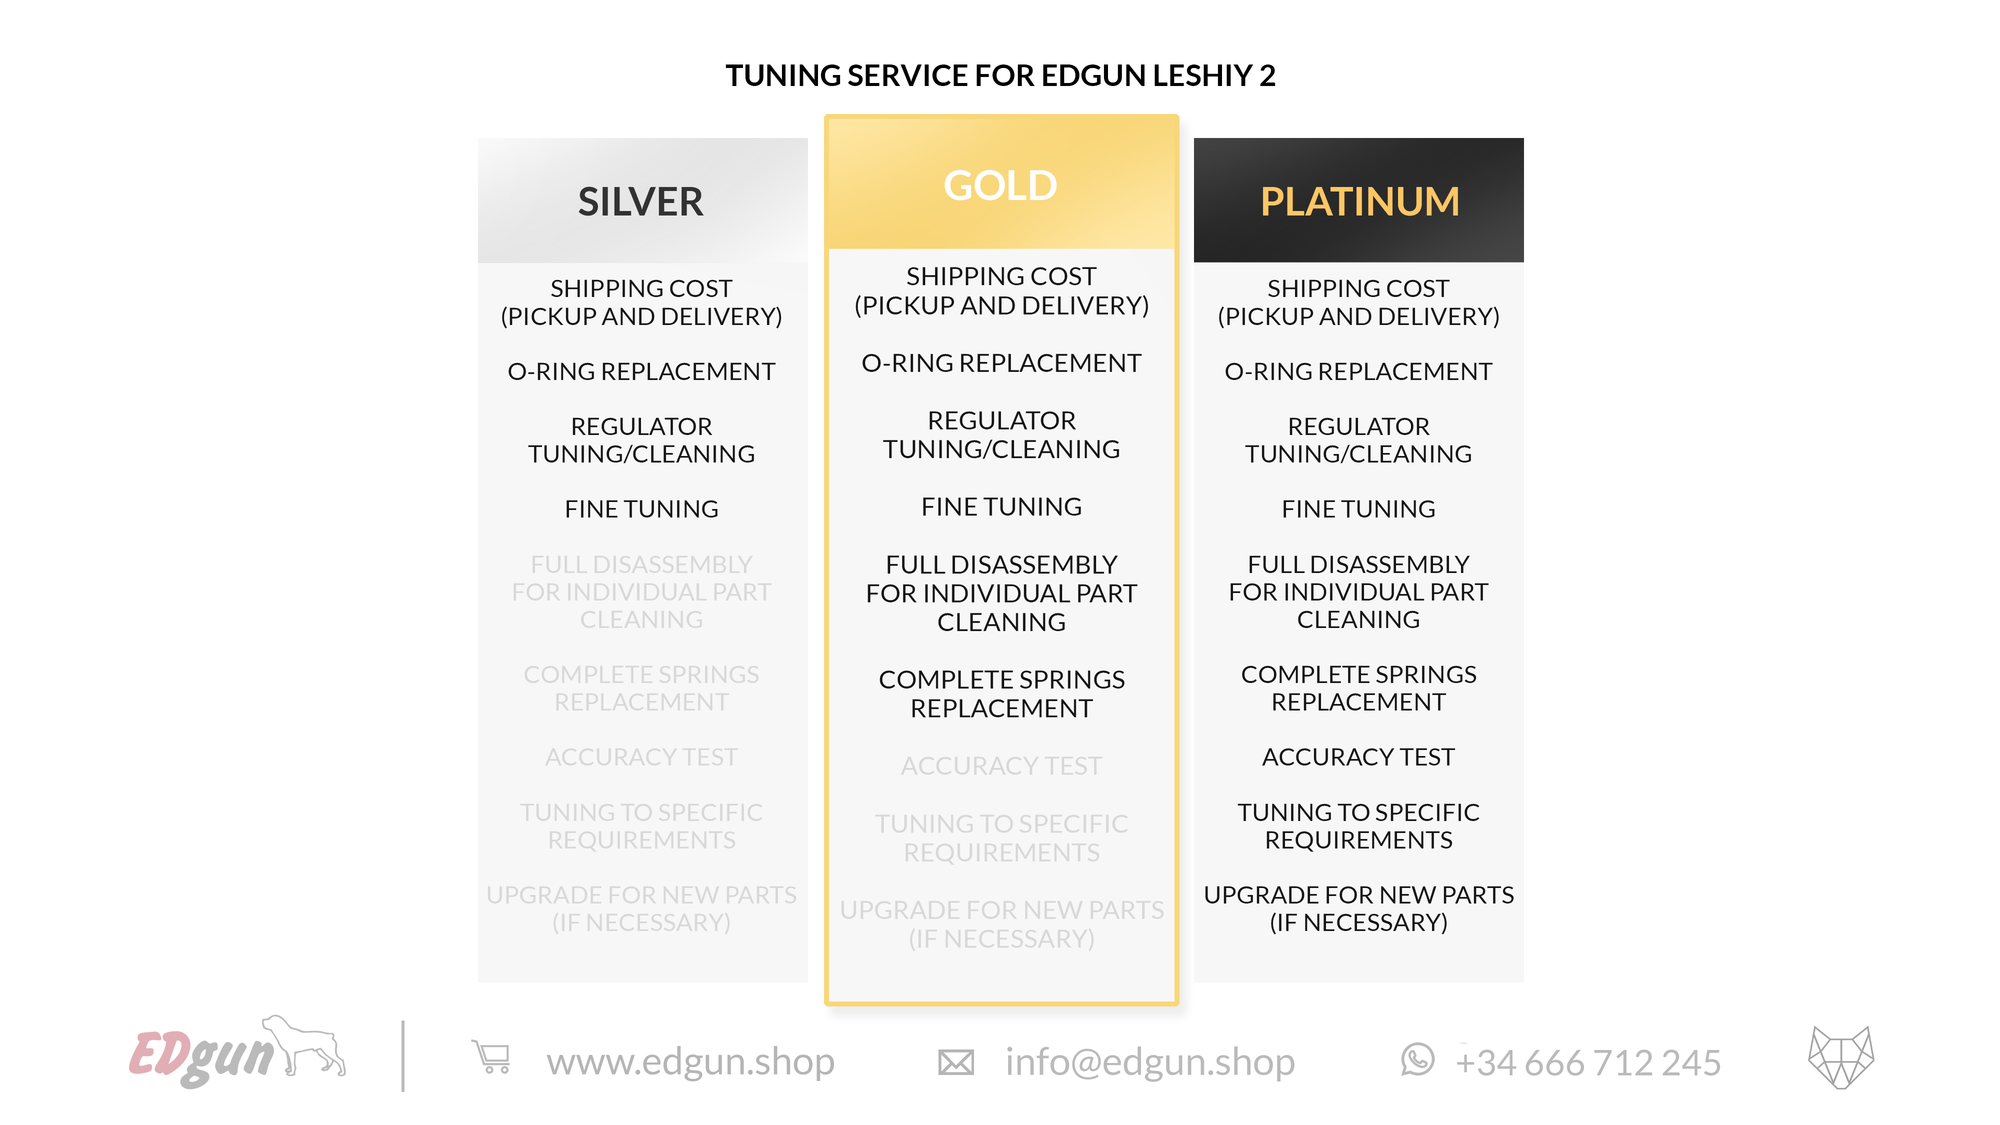 Edgun tuning service in gold